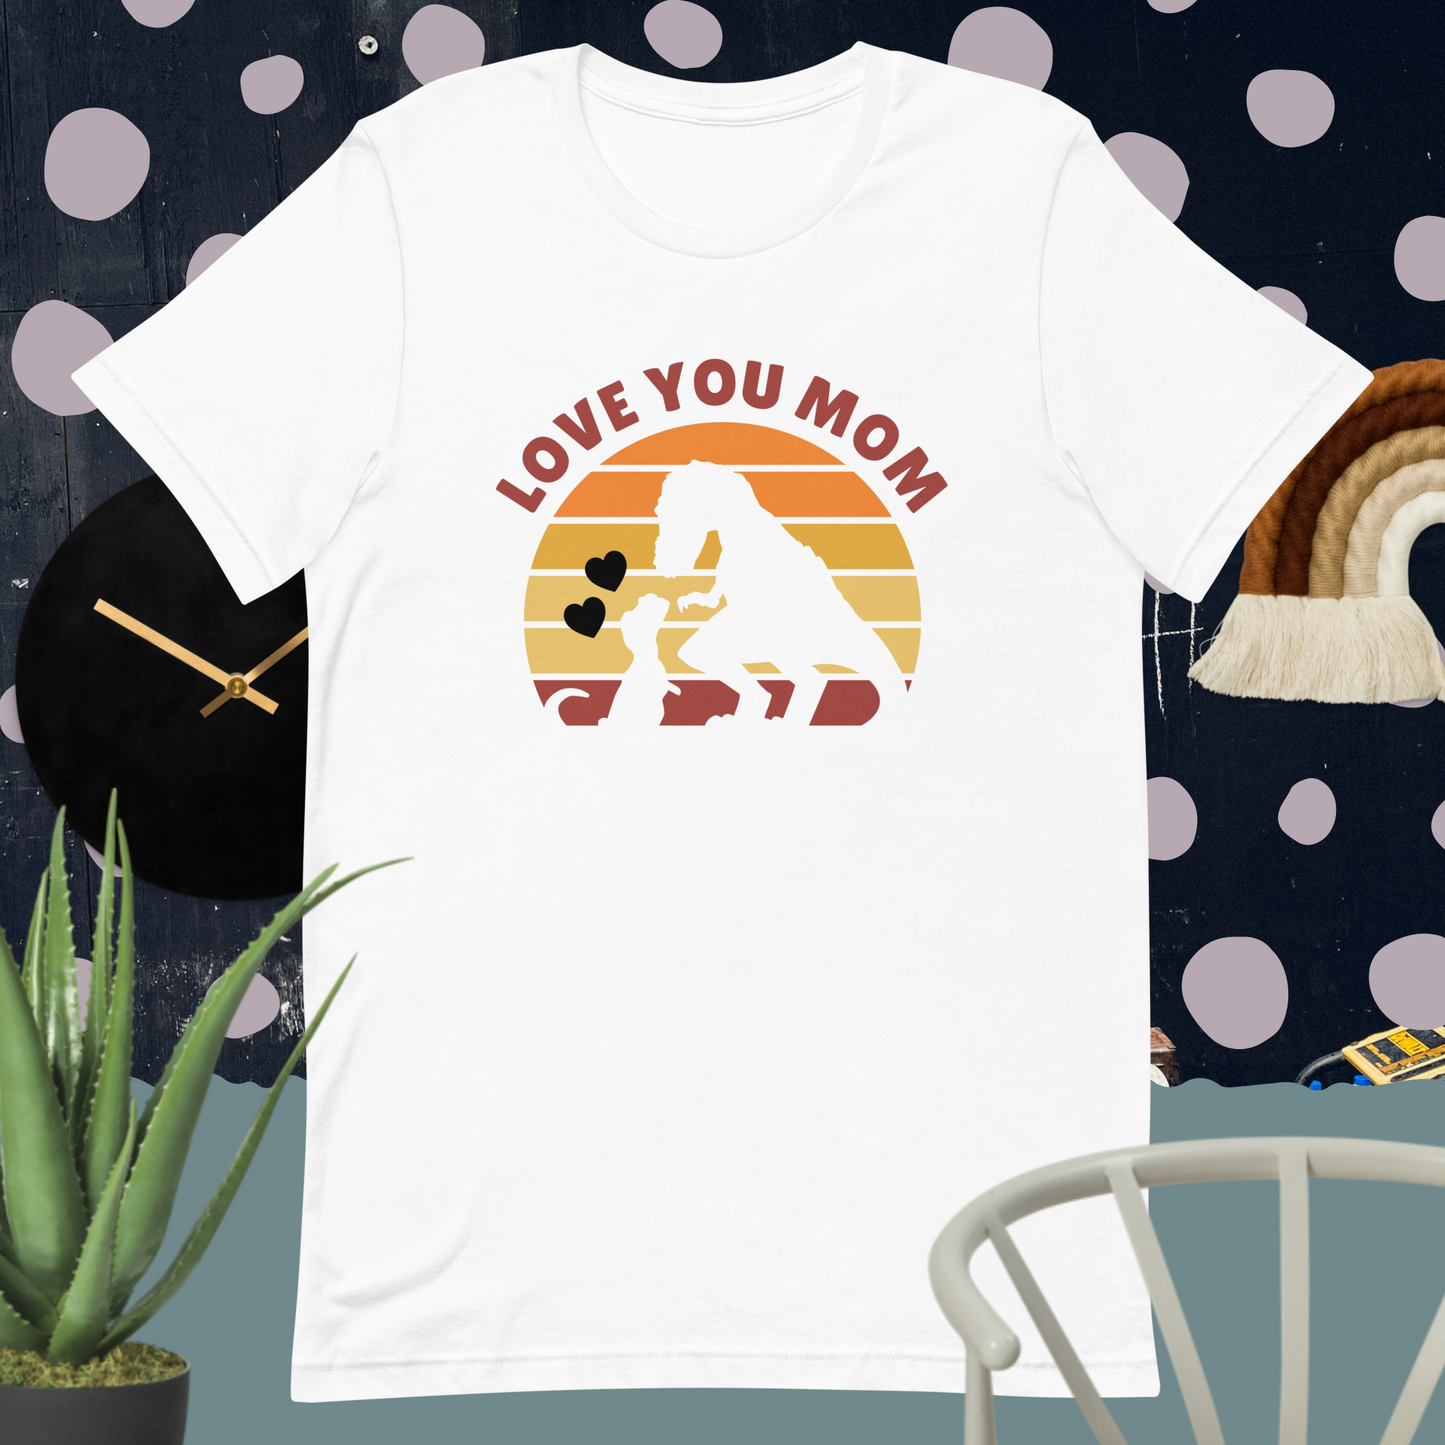 I Love You Mom: Unisex T-shirt